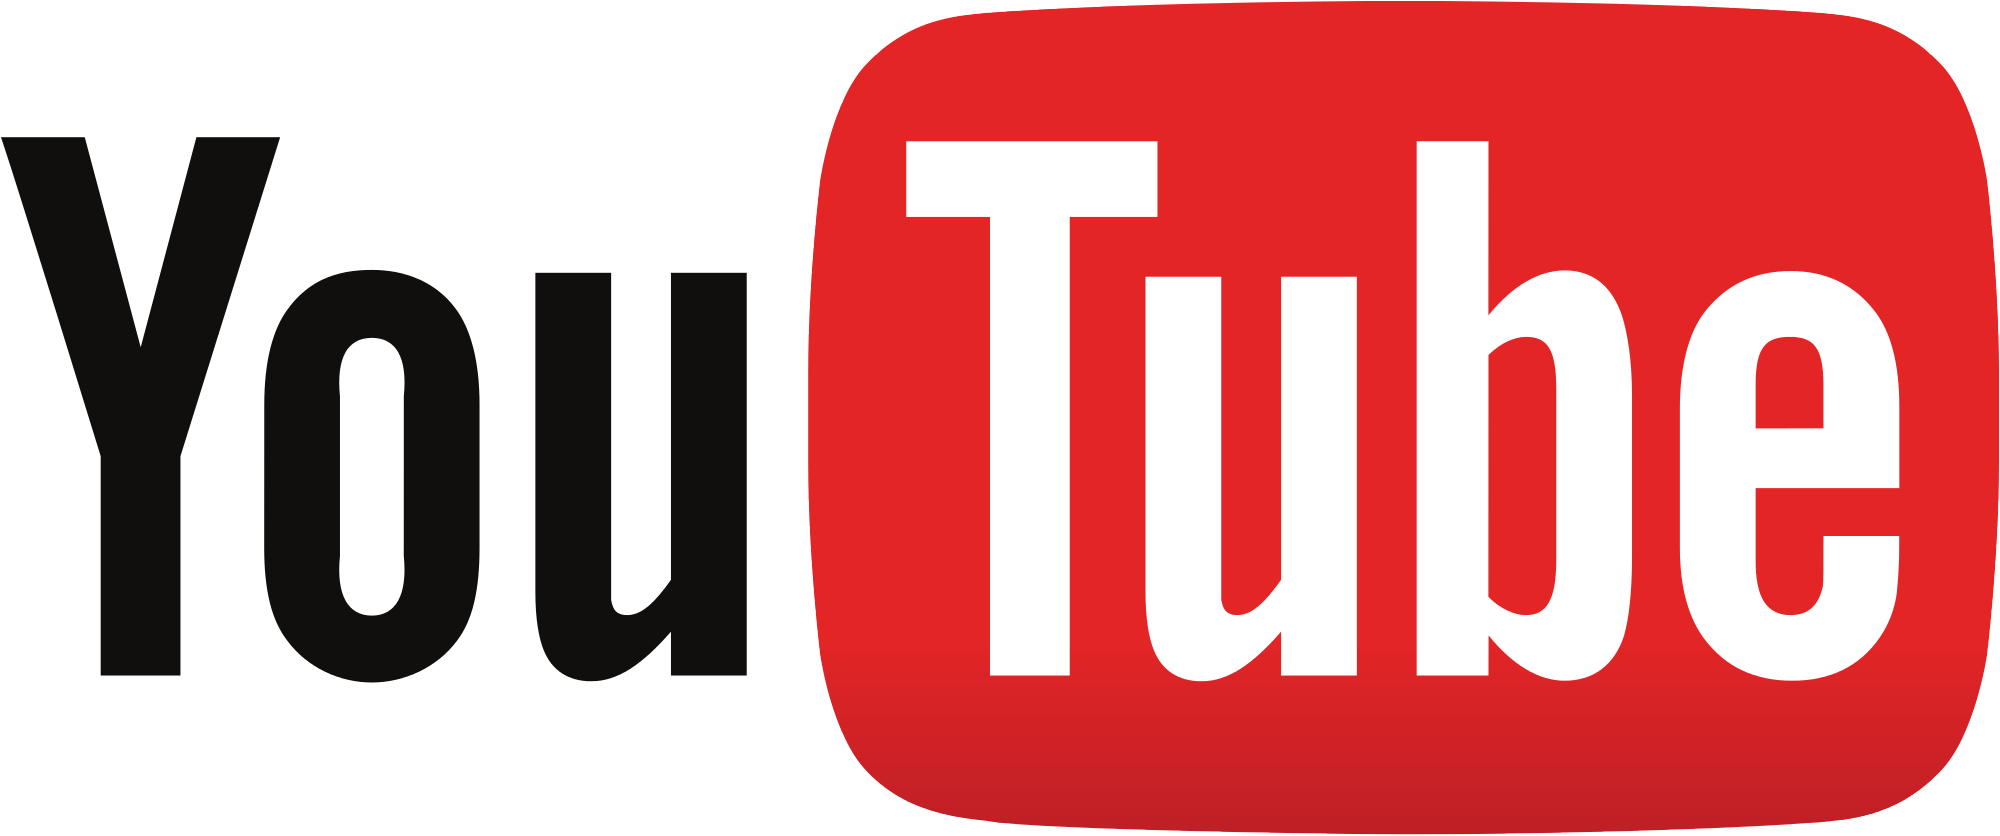 Logo YouTube 2013 en formato SVG